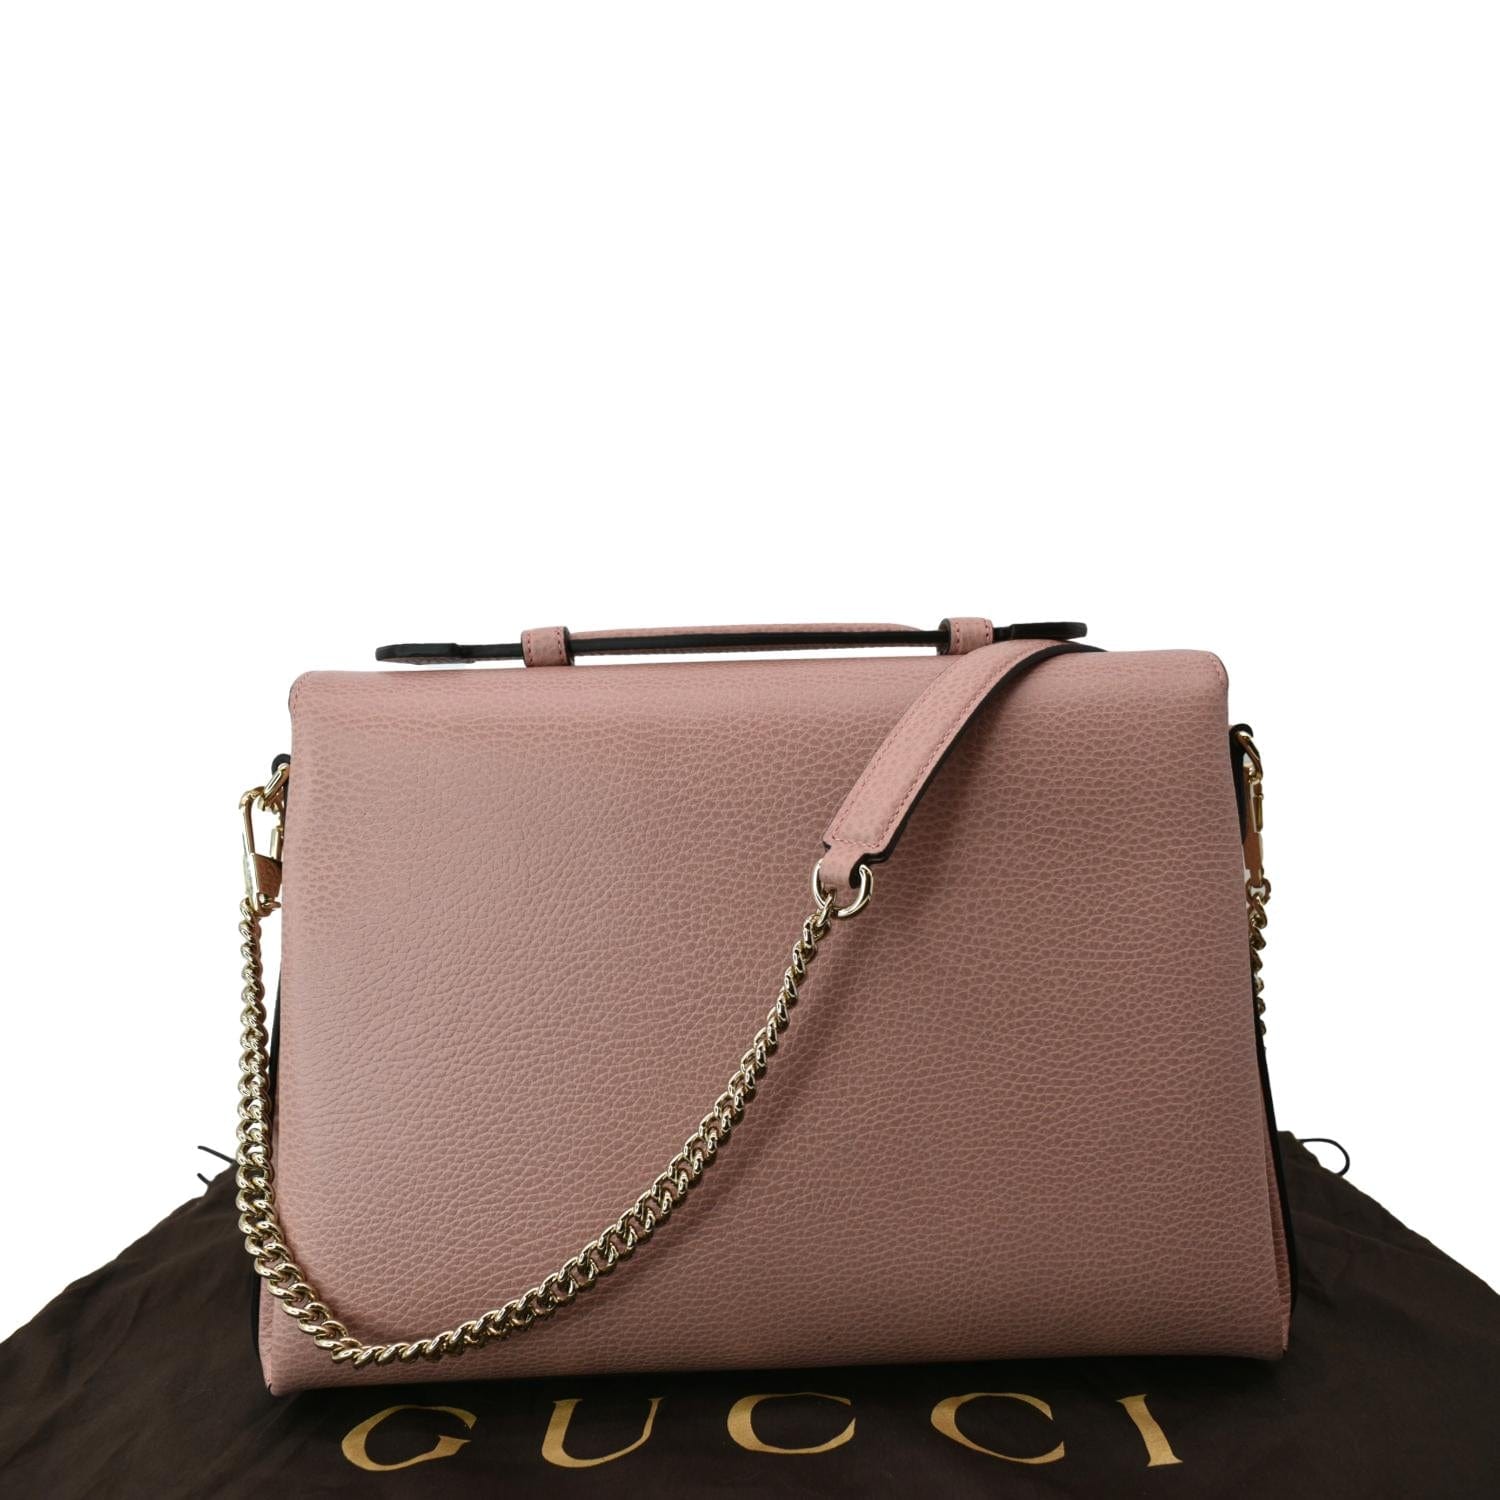 Gucci Marmont Gray Dollar Calfskin Leather Interlocking G Bag